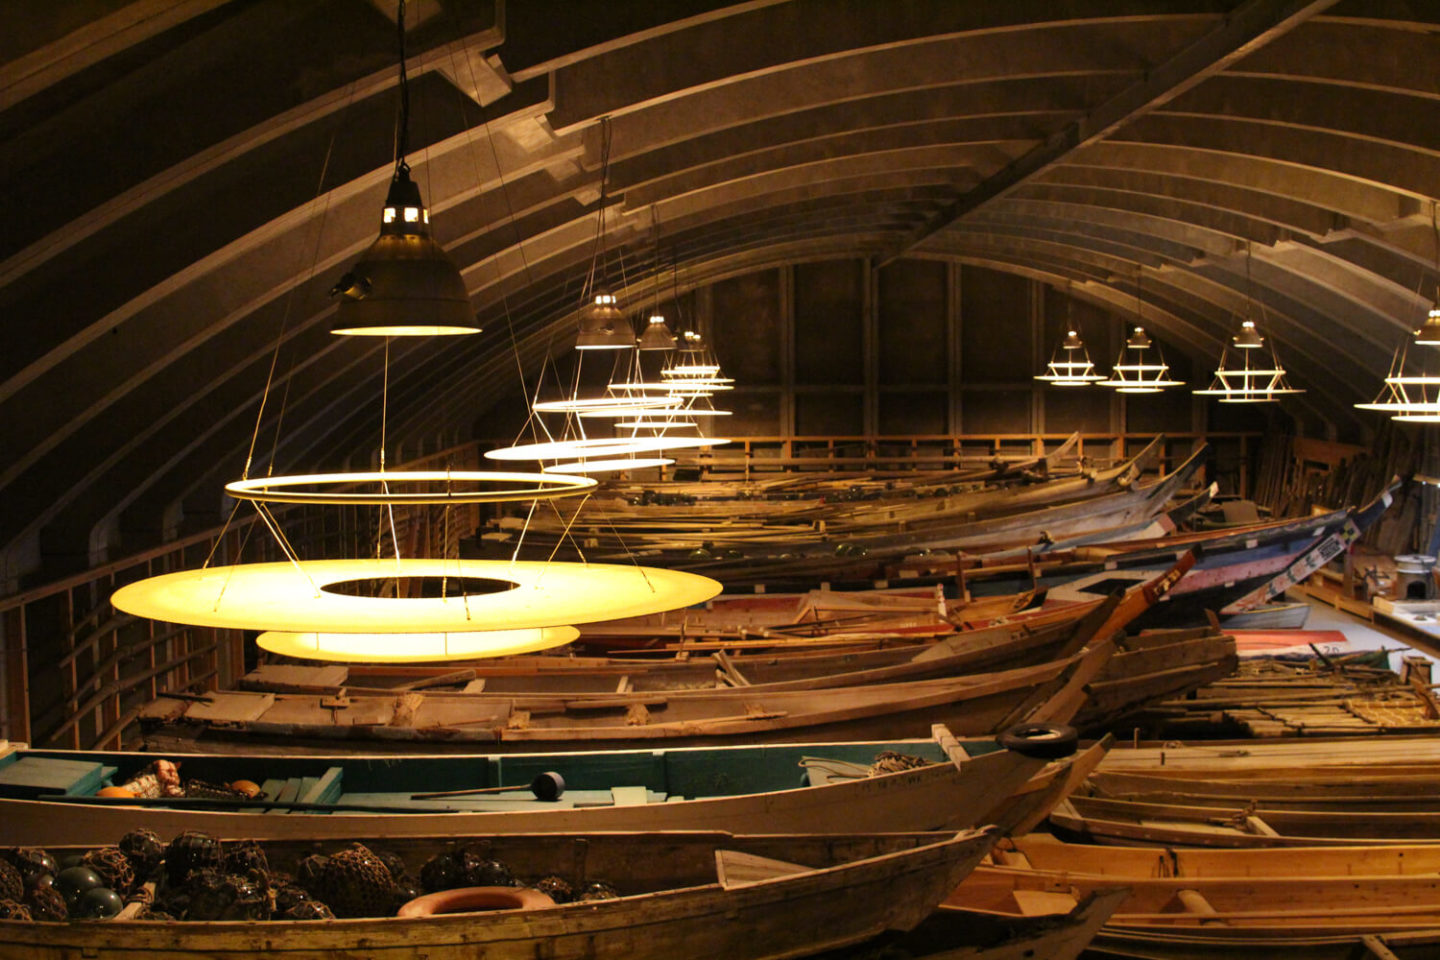 鳥羽市立 海の博物館 TOBA SEA-FOLK MUSEUM 船保管倉庫